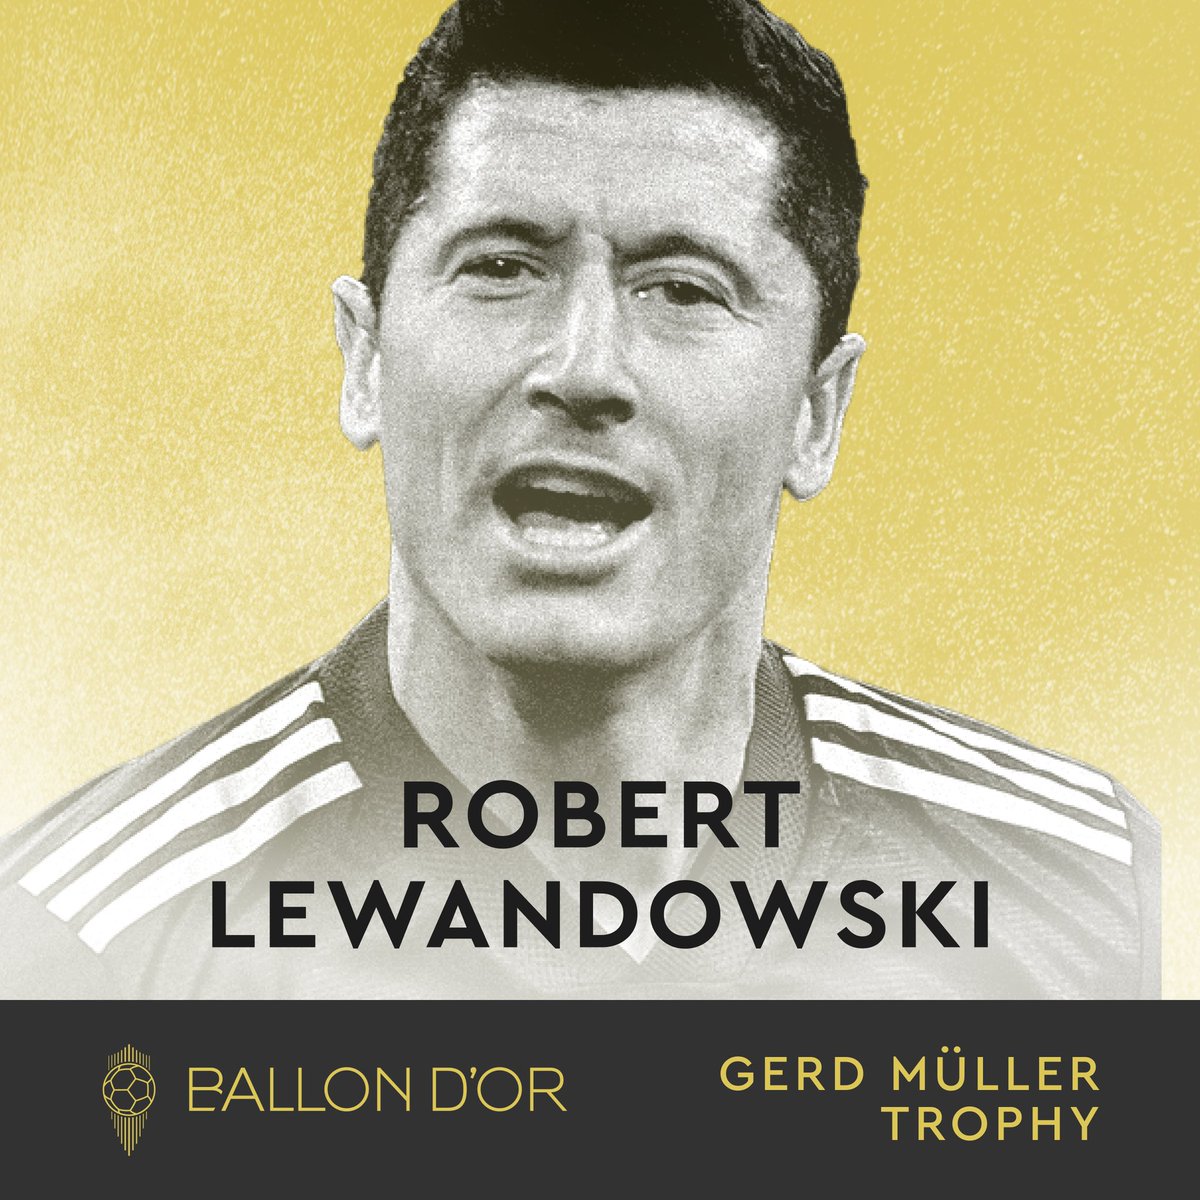 🎖️EL MEJOR.
El 🇵🇱 Robert Lewandowski (34/#FCBarcelona) ha recibido el #TrophéeGerdMuller.

¿Opiniones?